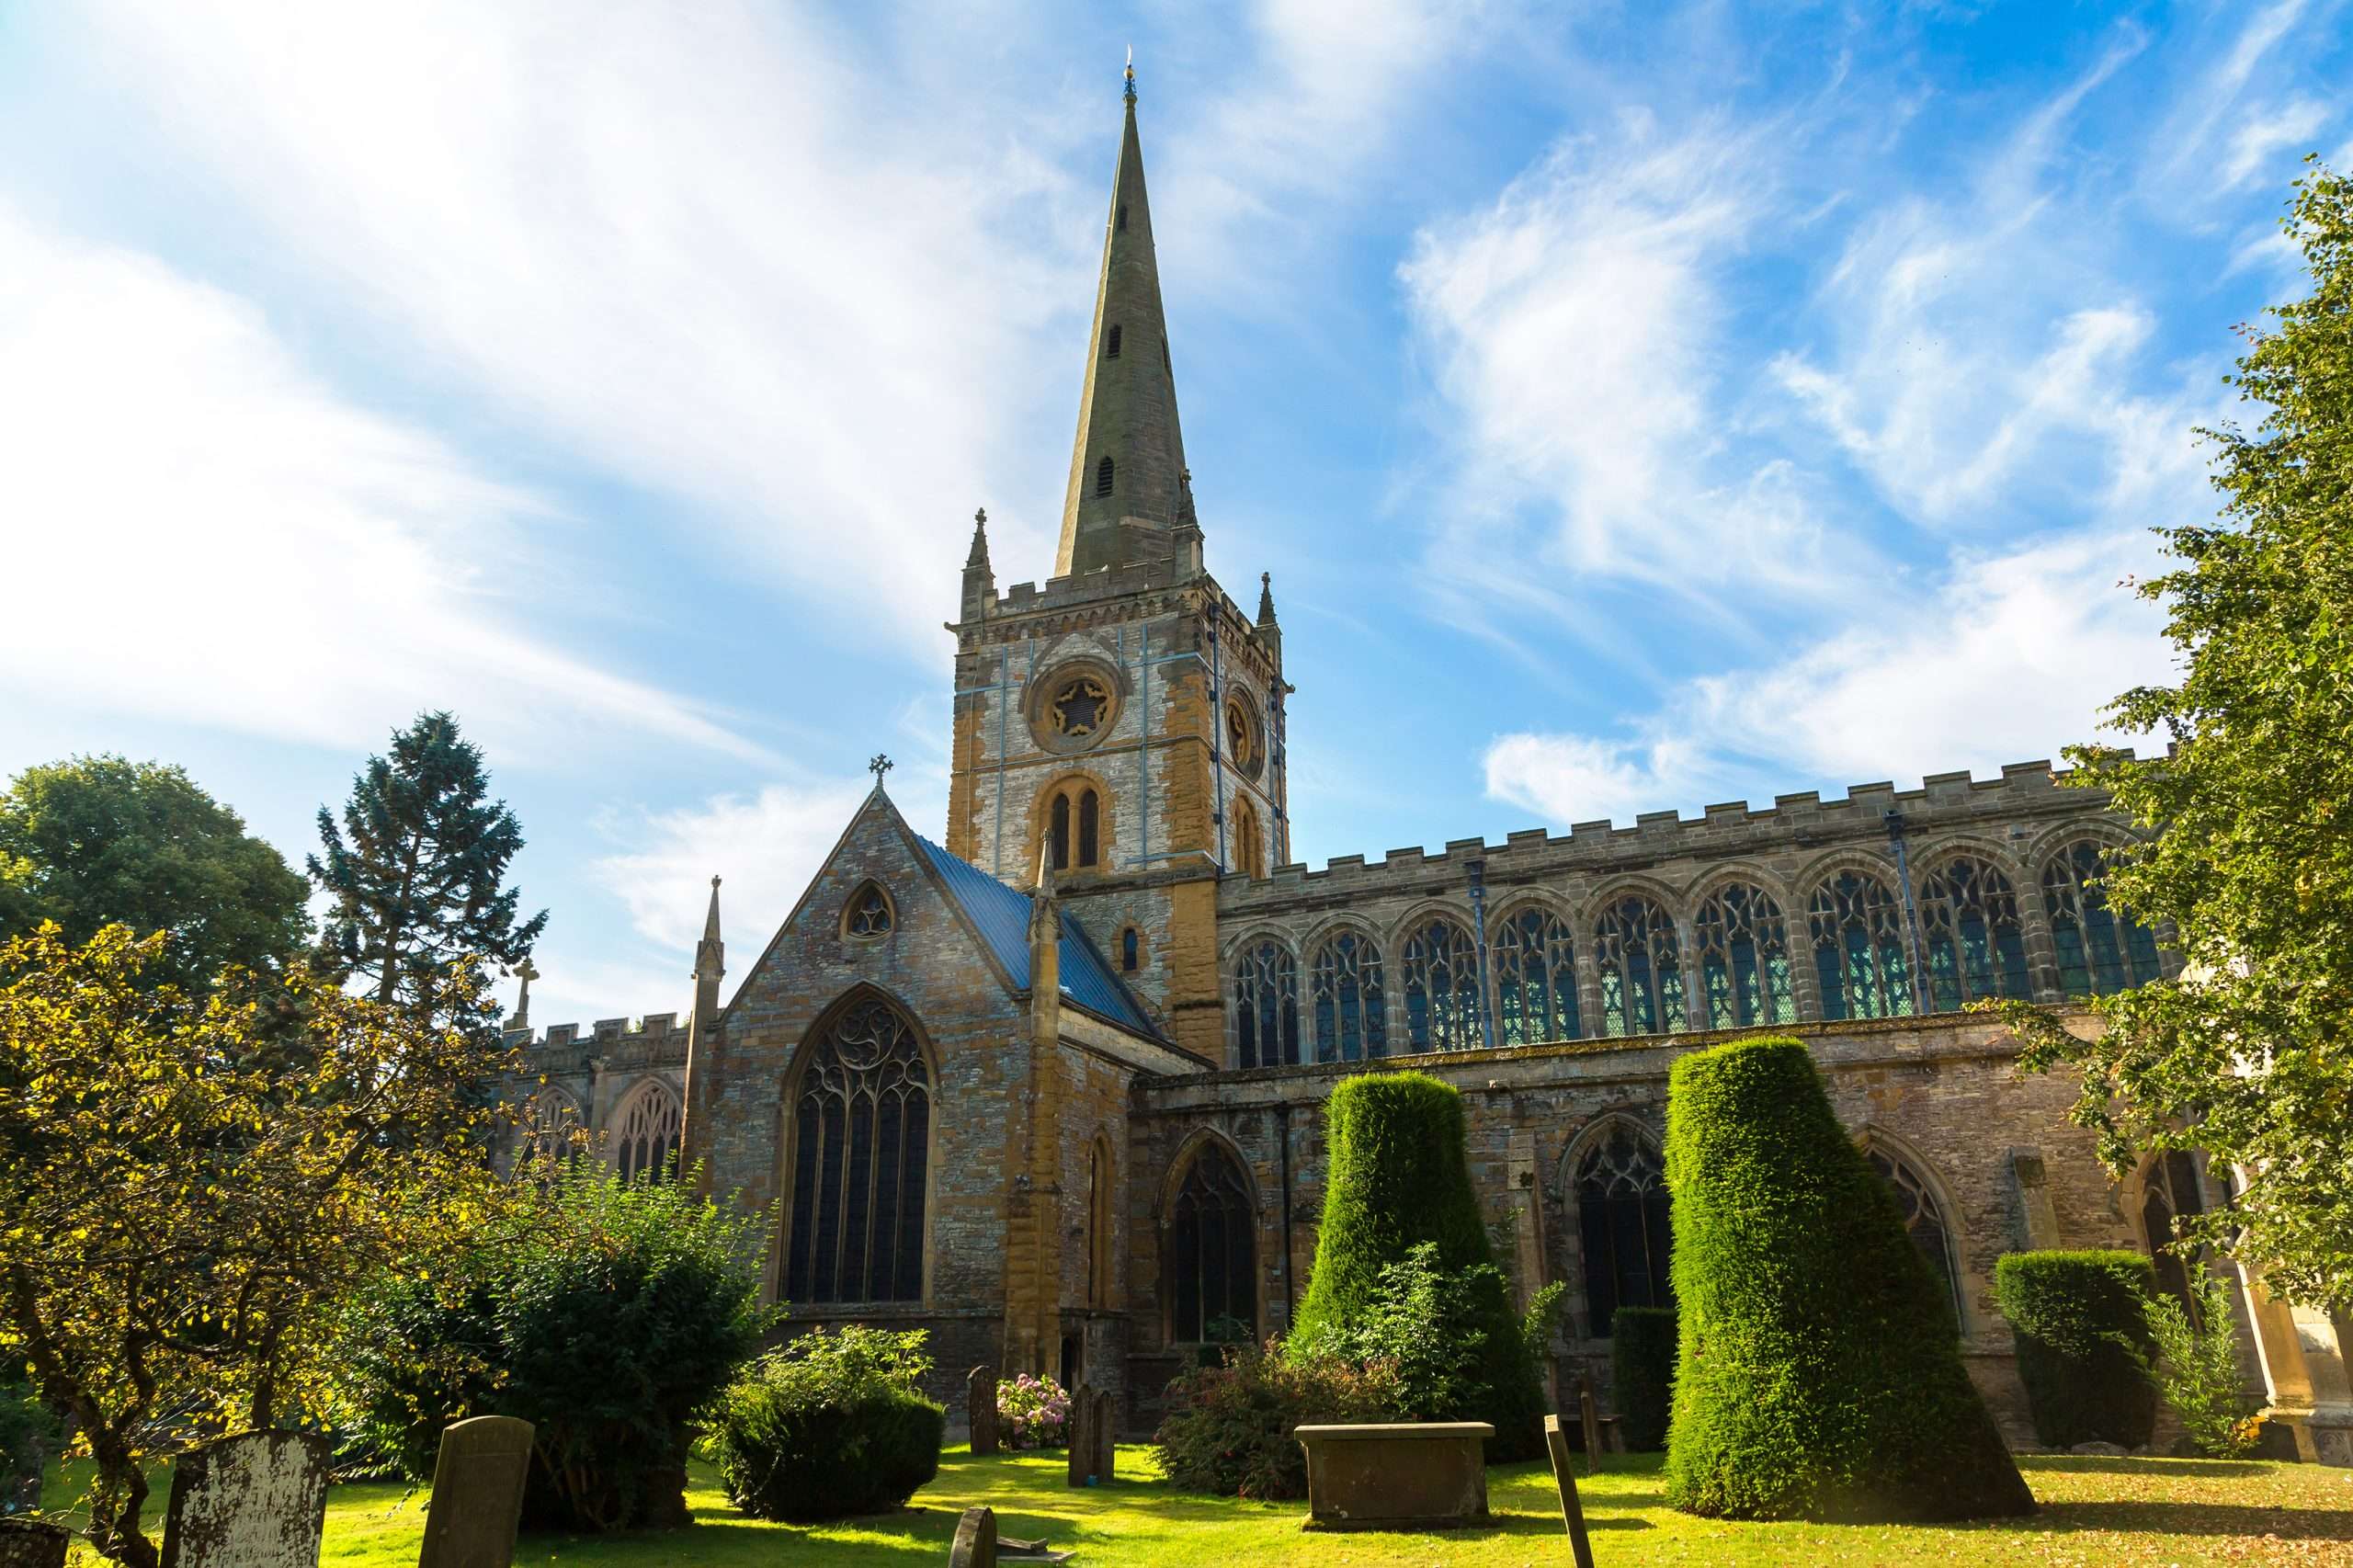 Holy Trinity Church - William Shakespeare Stratford-upon-Avon